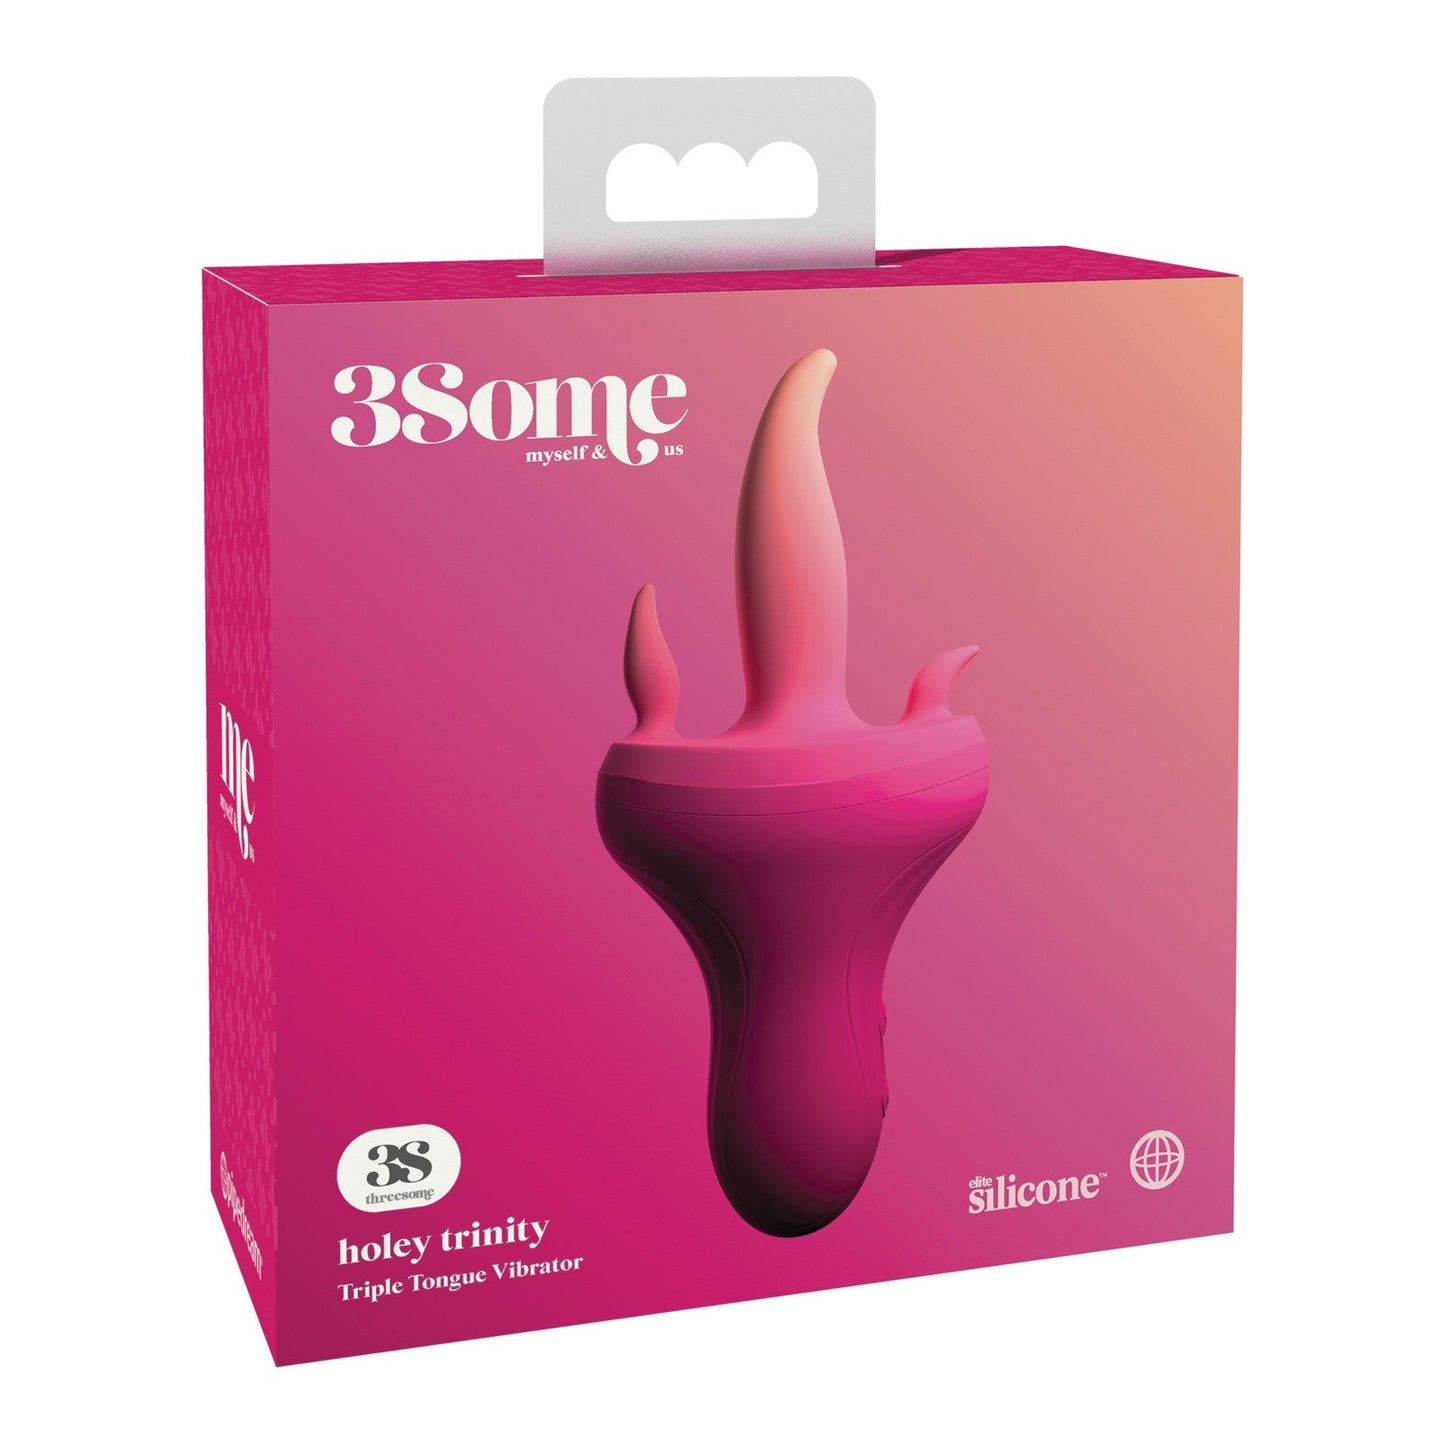 Threesome Holey Trinity Triple Tongue Vibrator  G-bliss O-maker- Pink